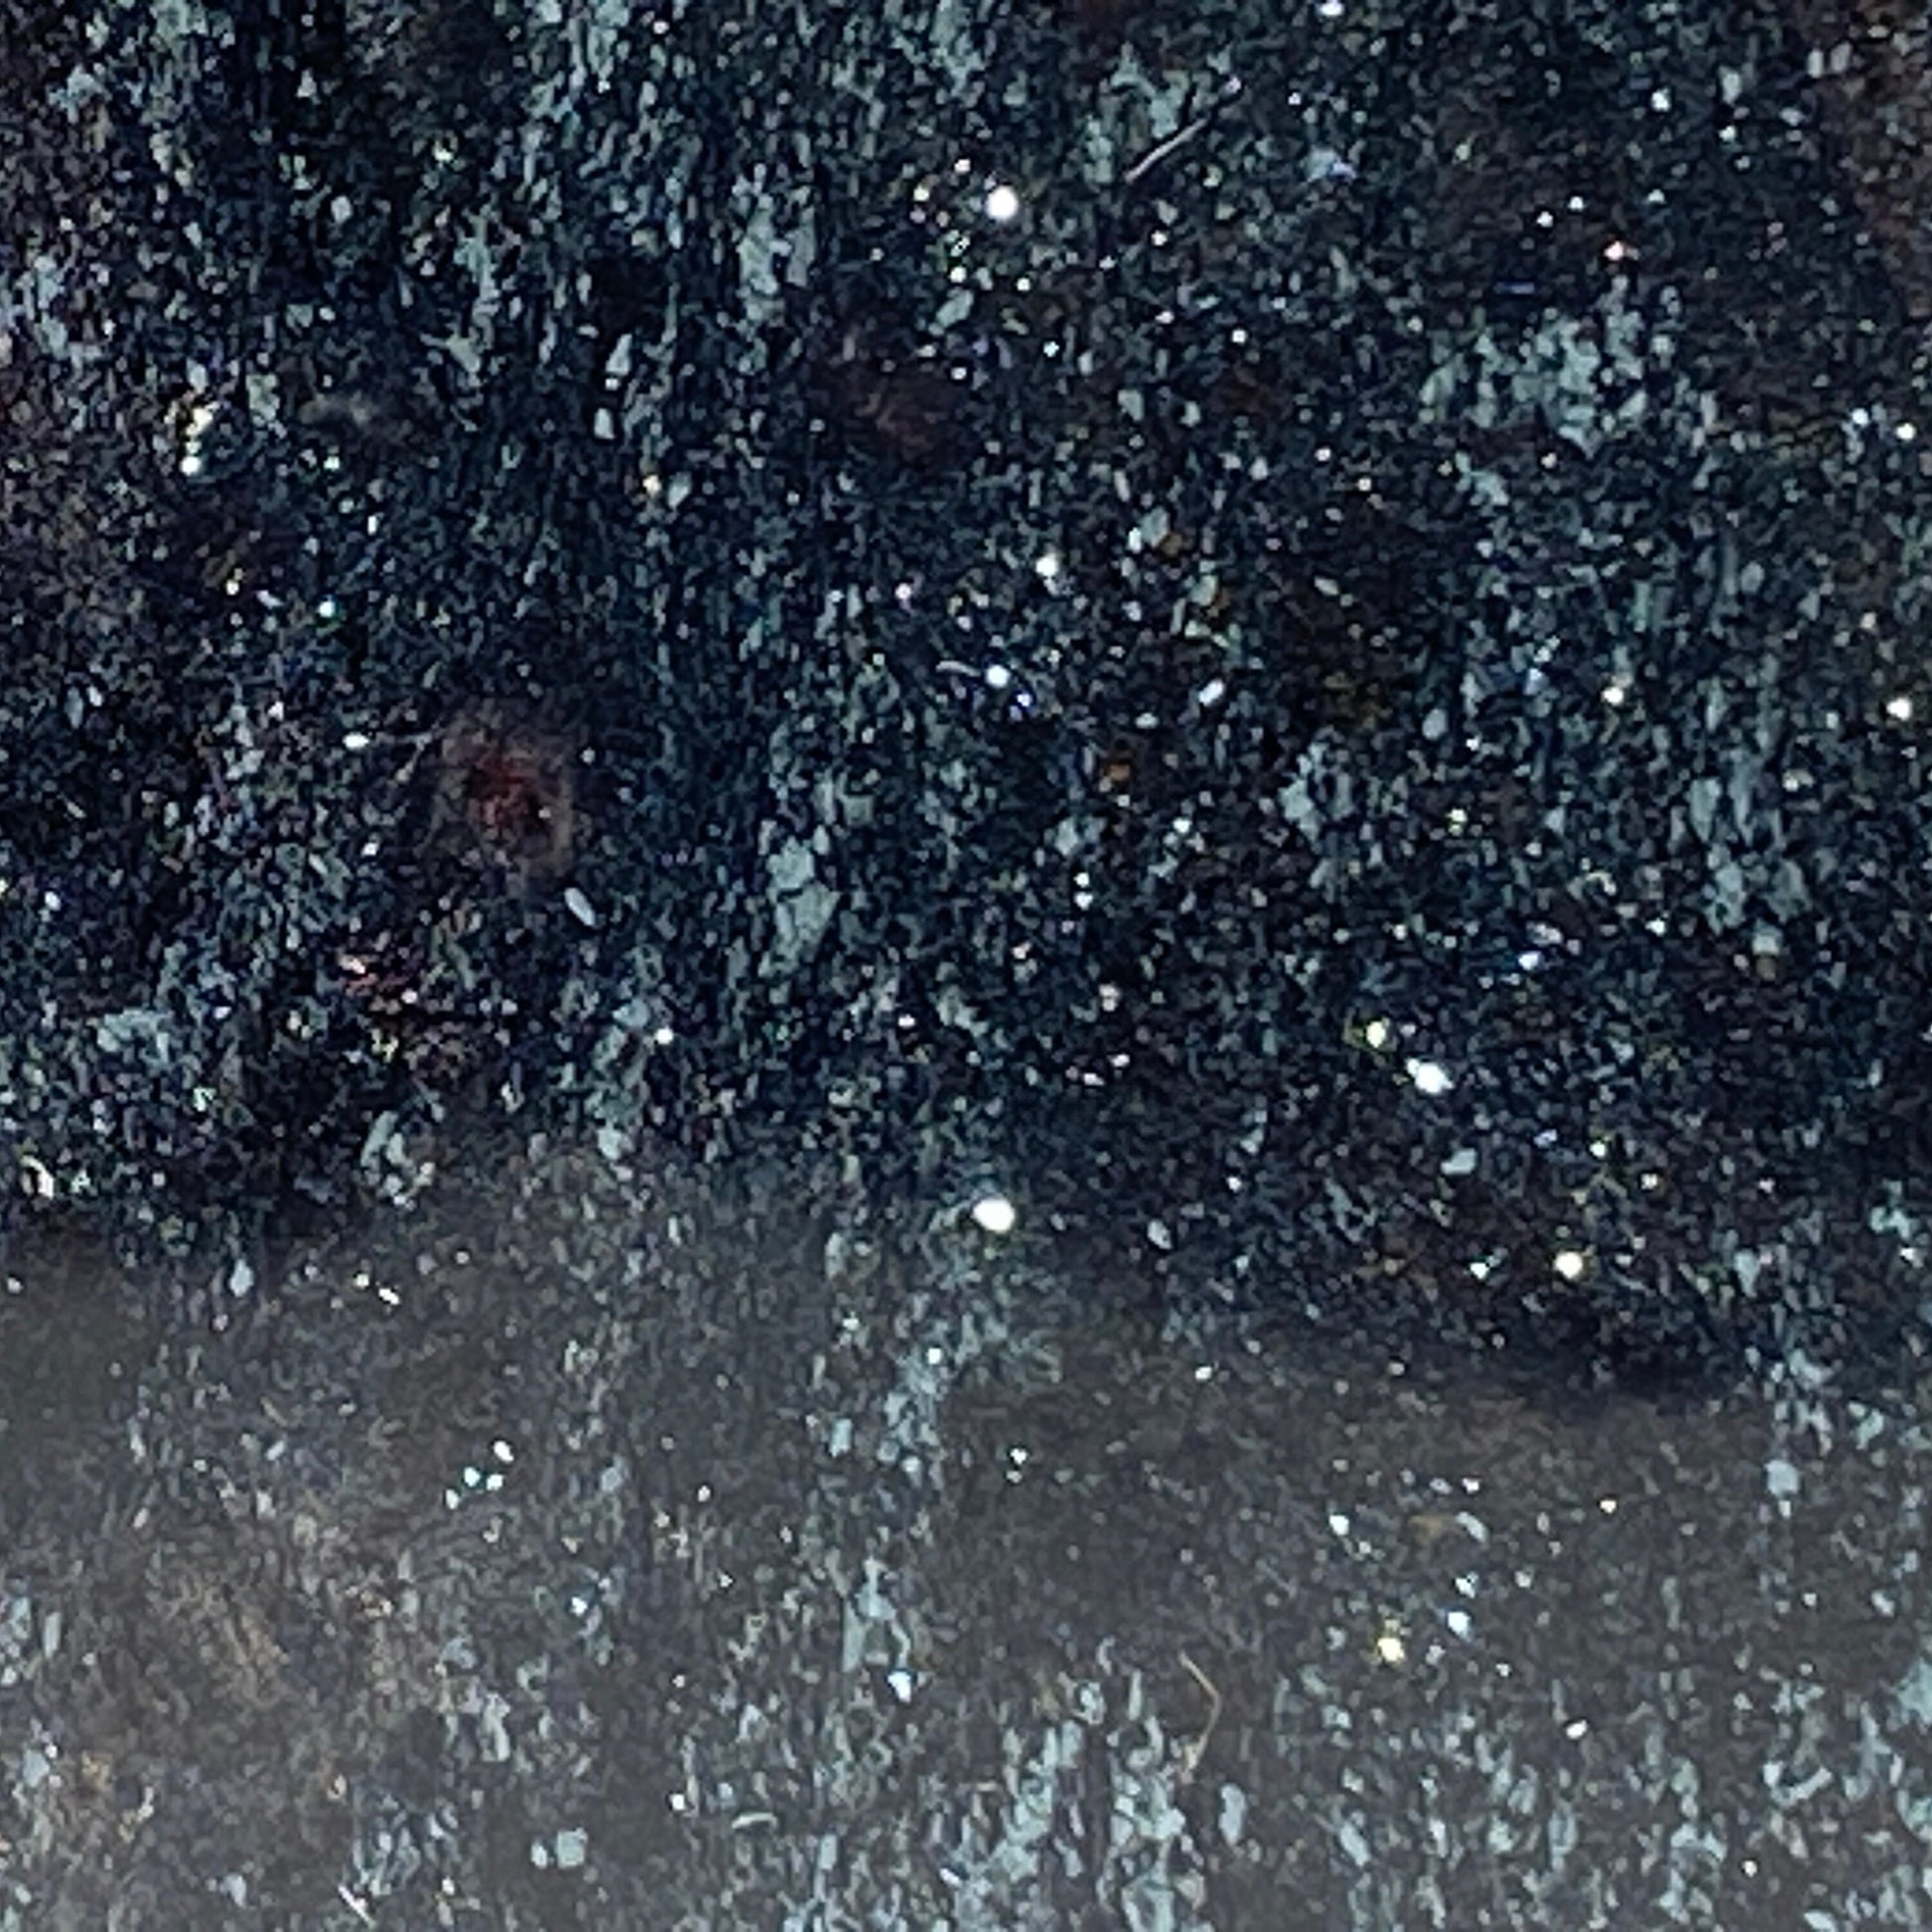 Specular Hematite freestanding cut base | iron ore, michigan iron ore, specularite, rock decor, michigan hematite, specularite specimen